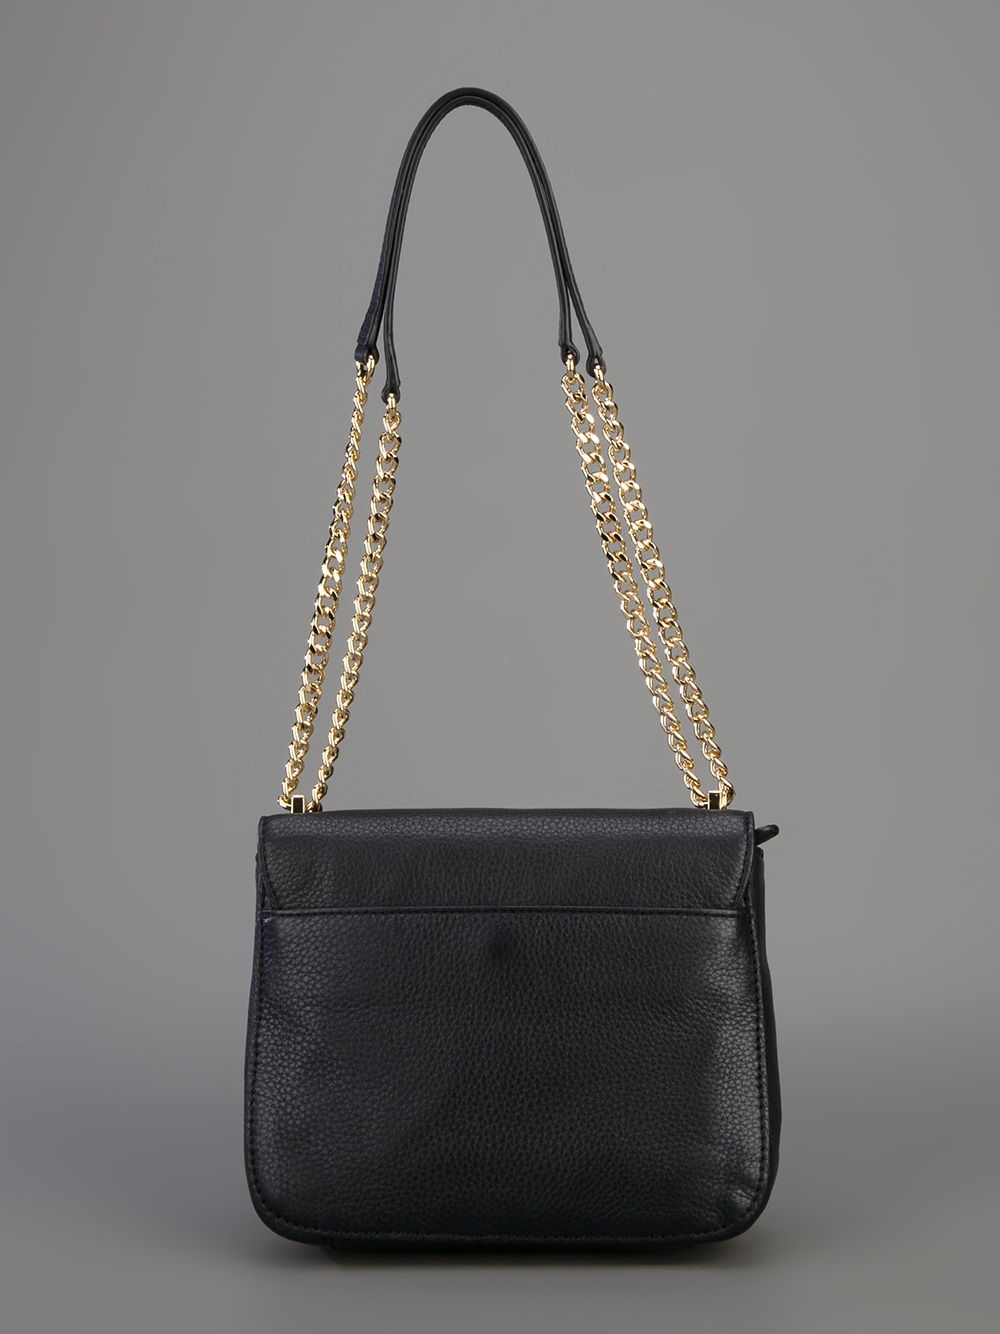 Lyst - Michael Kors Chain Detail Shoulder Bag in Black